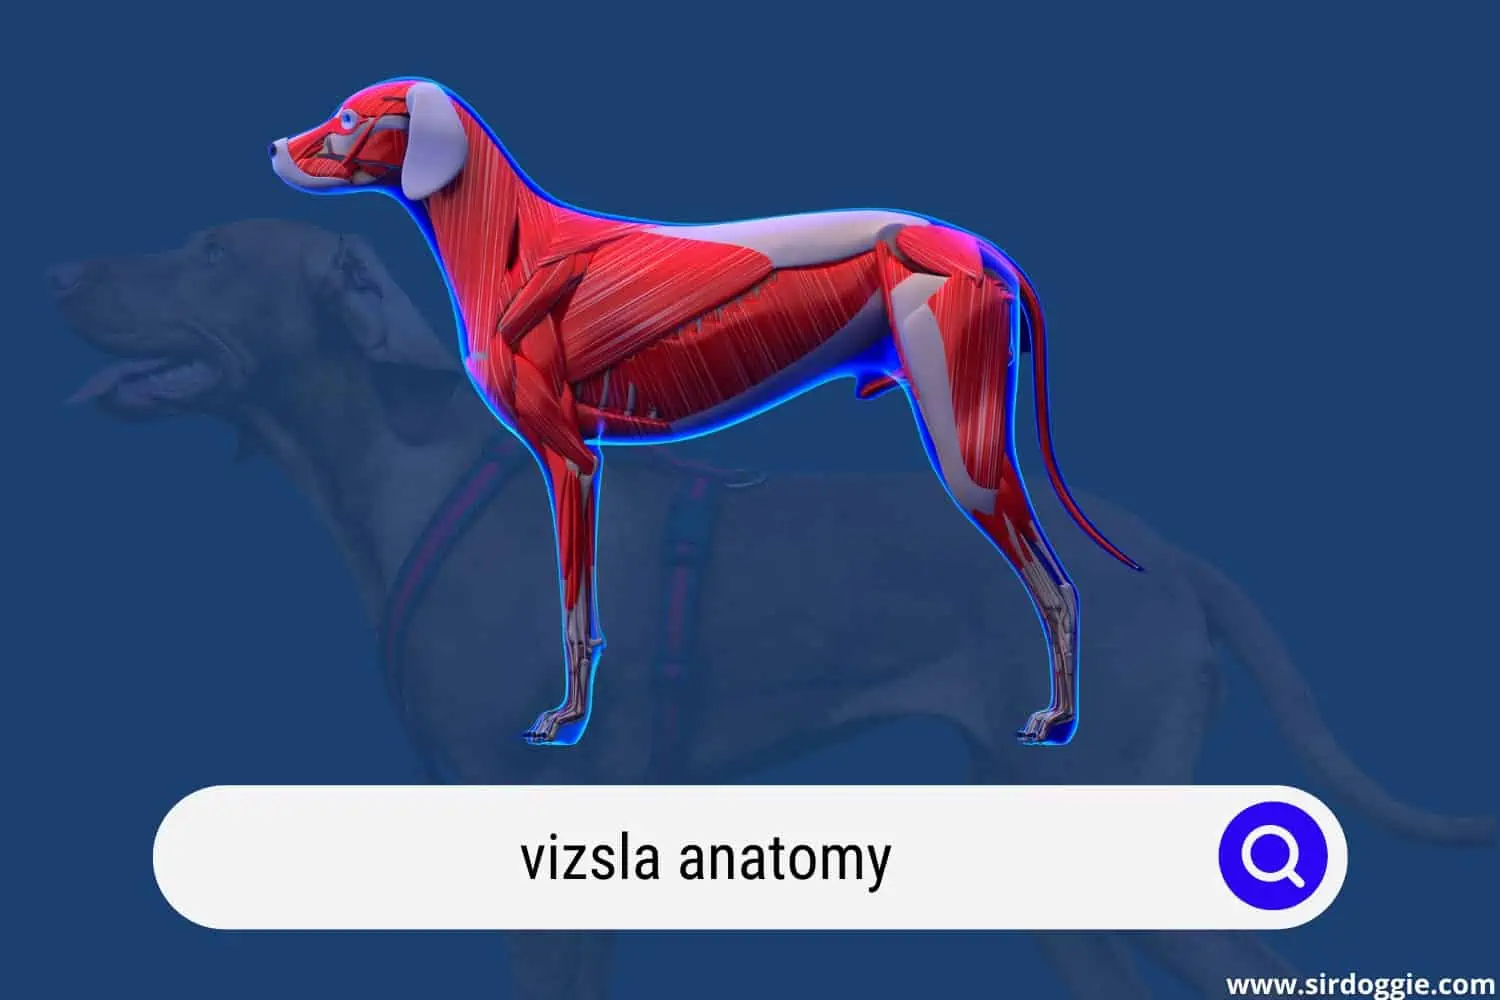 vizsla anatomy